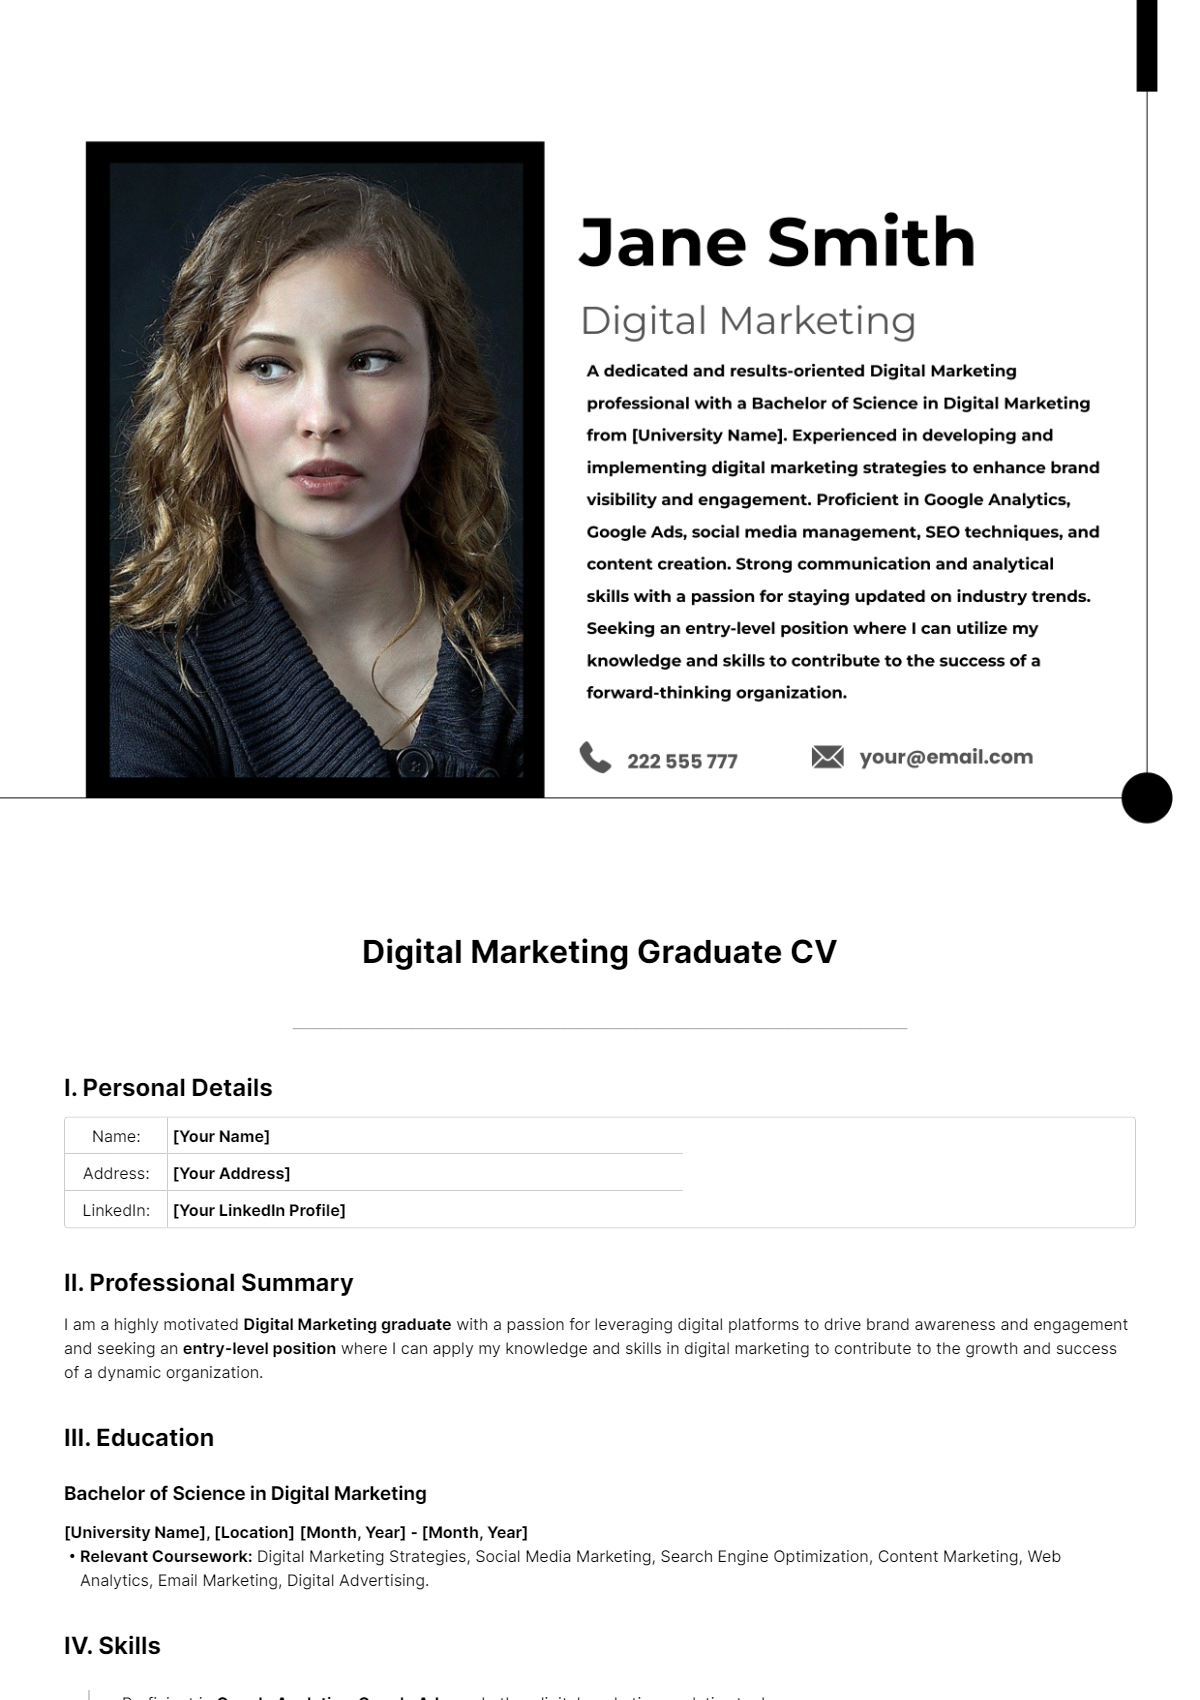 Digital Marketing Graduate CV Template